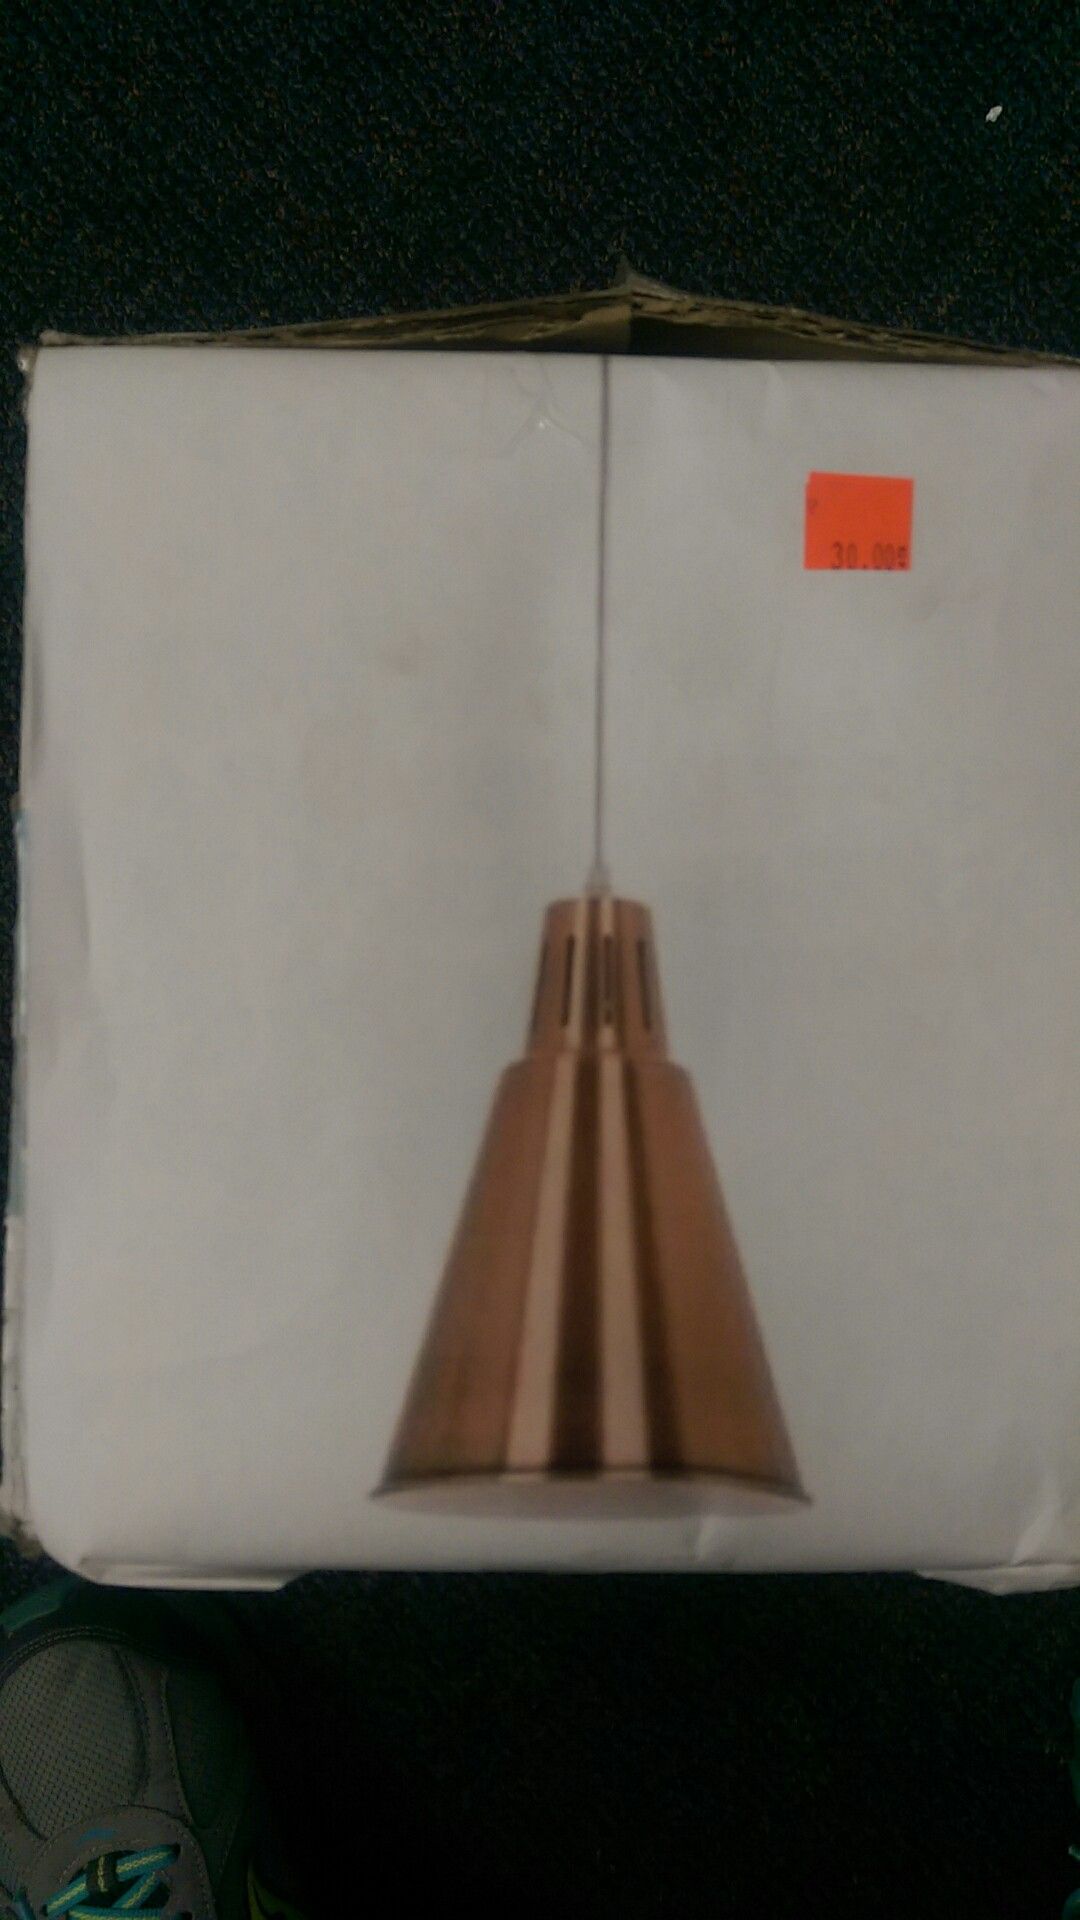 Copper metal pendant light fixture